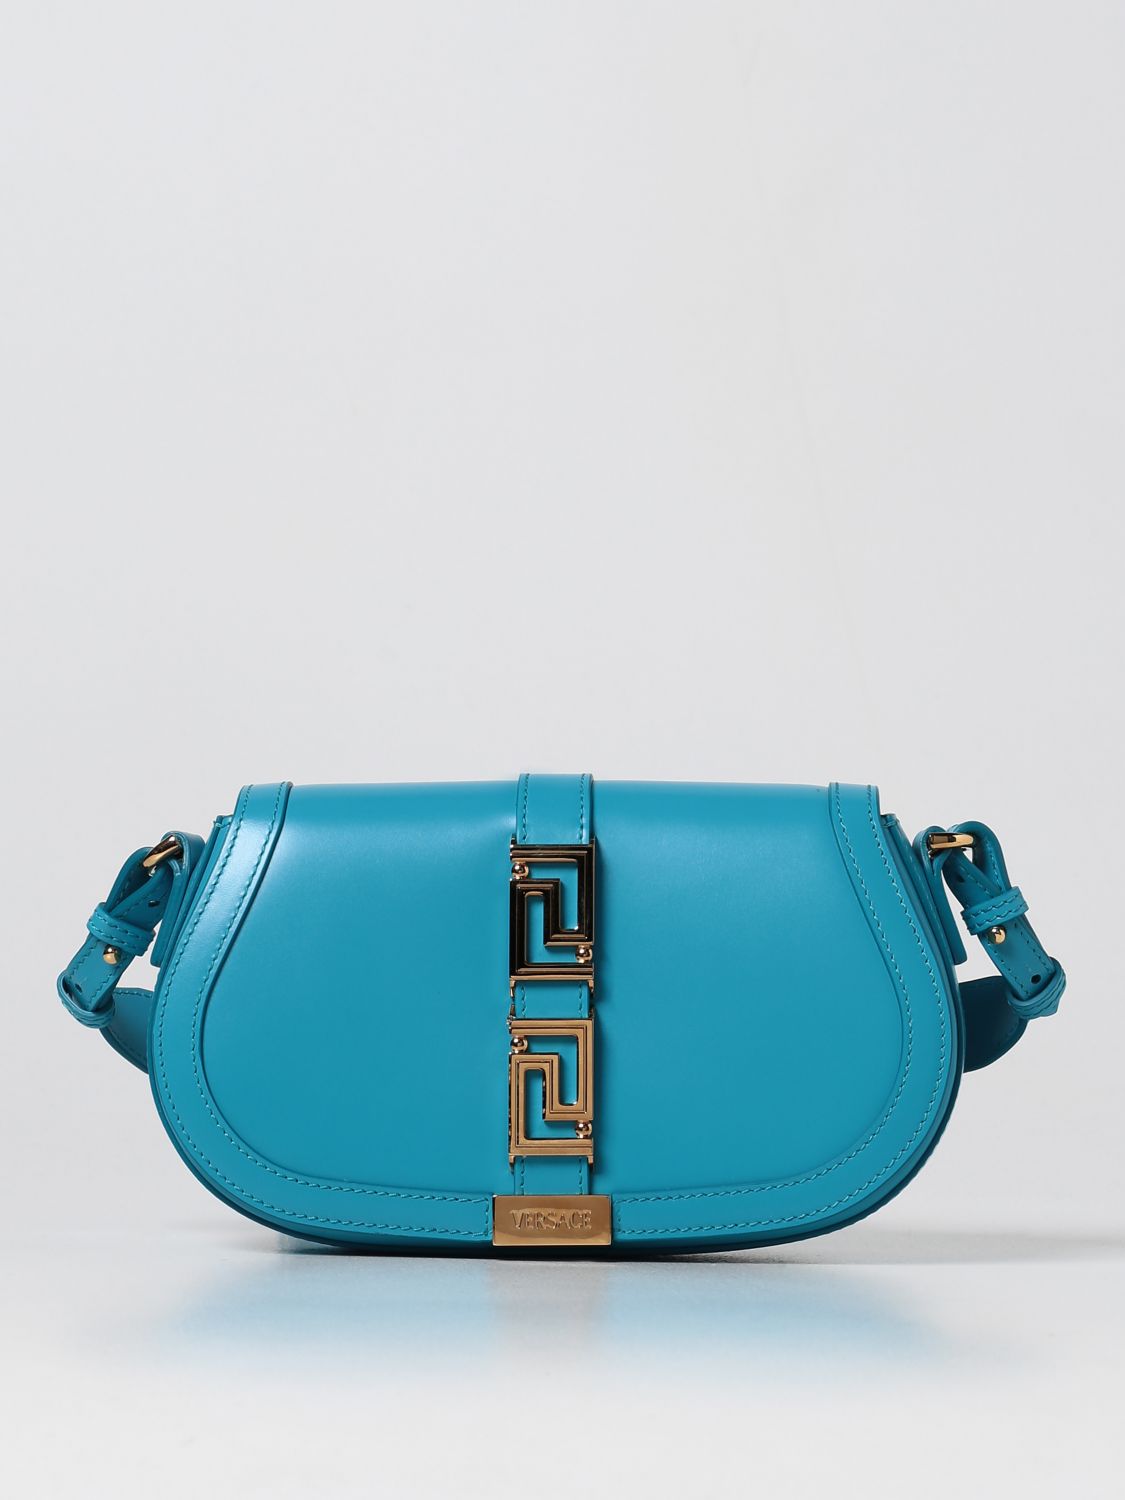 NWT Versace 19v69 Nicoletta Stingray Navy Blue Faux Leather Shoulder Bag